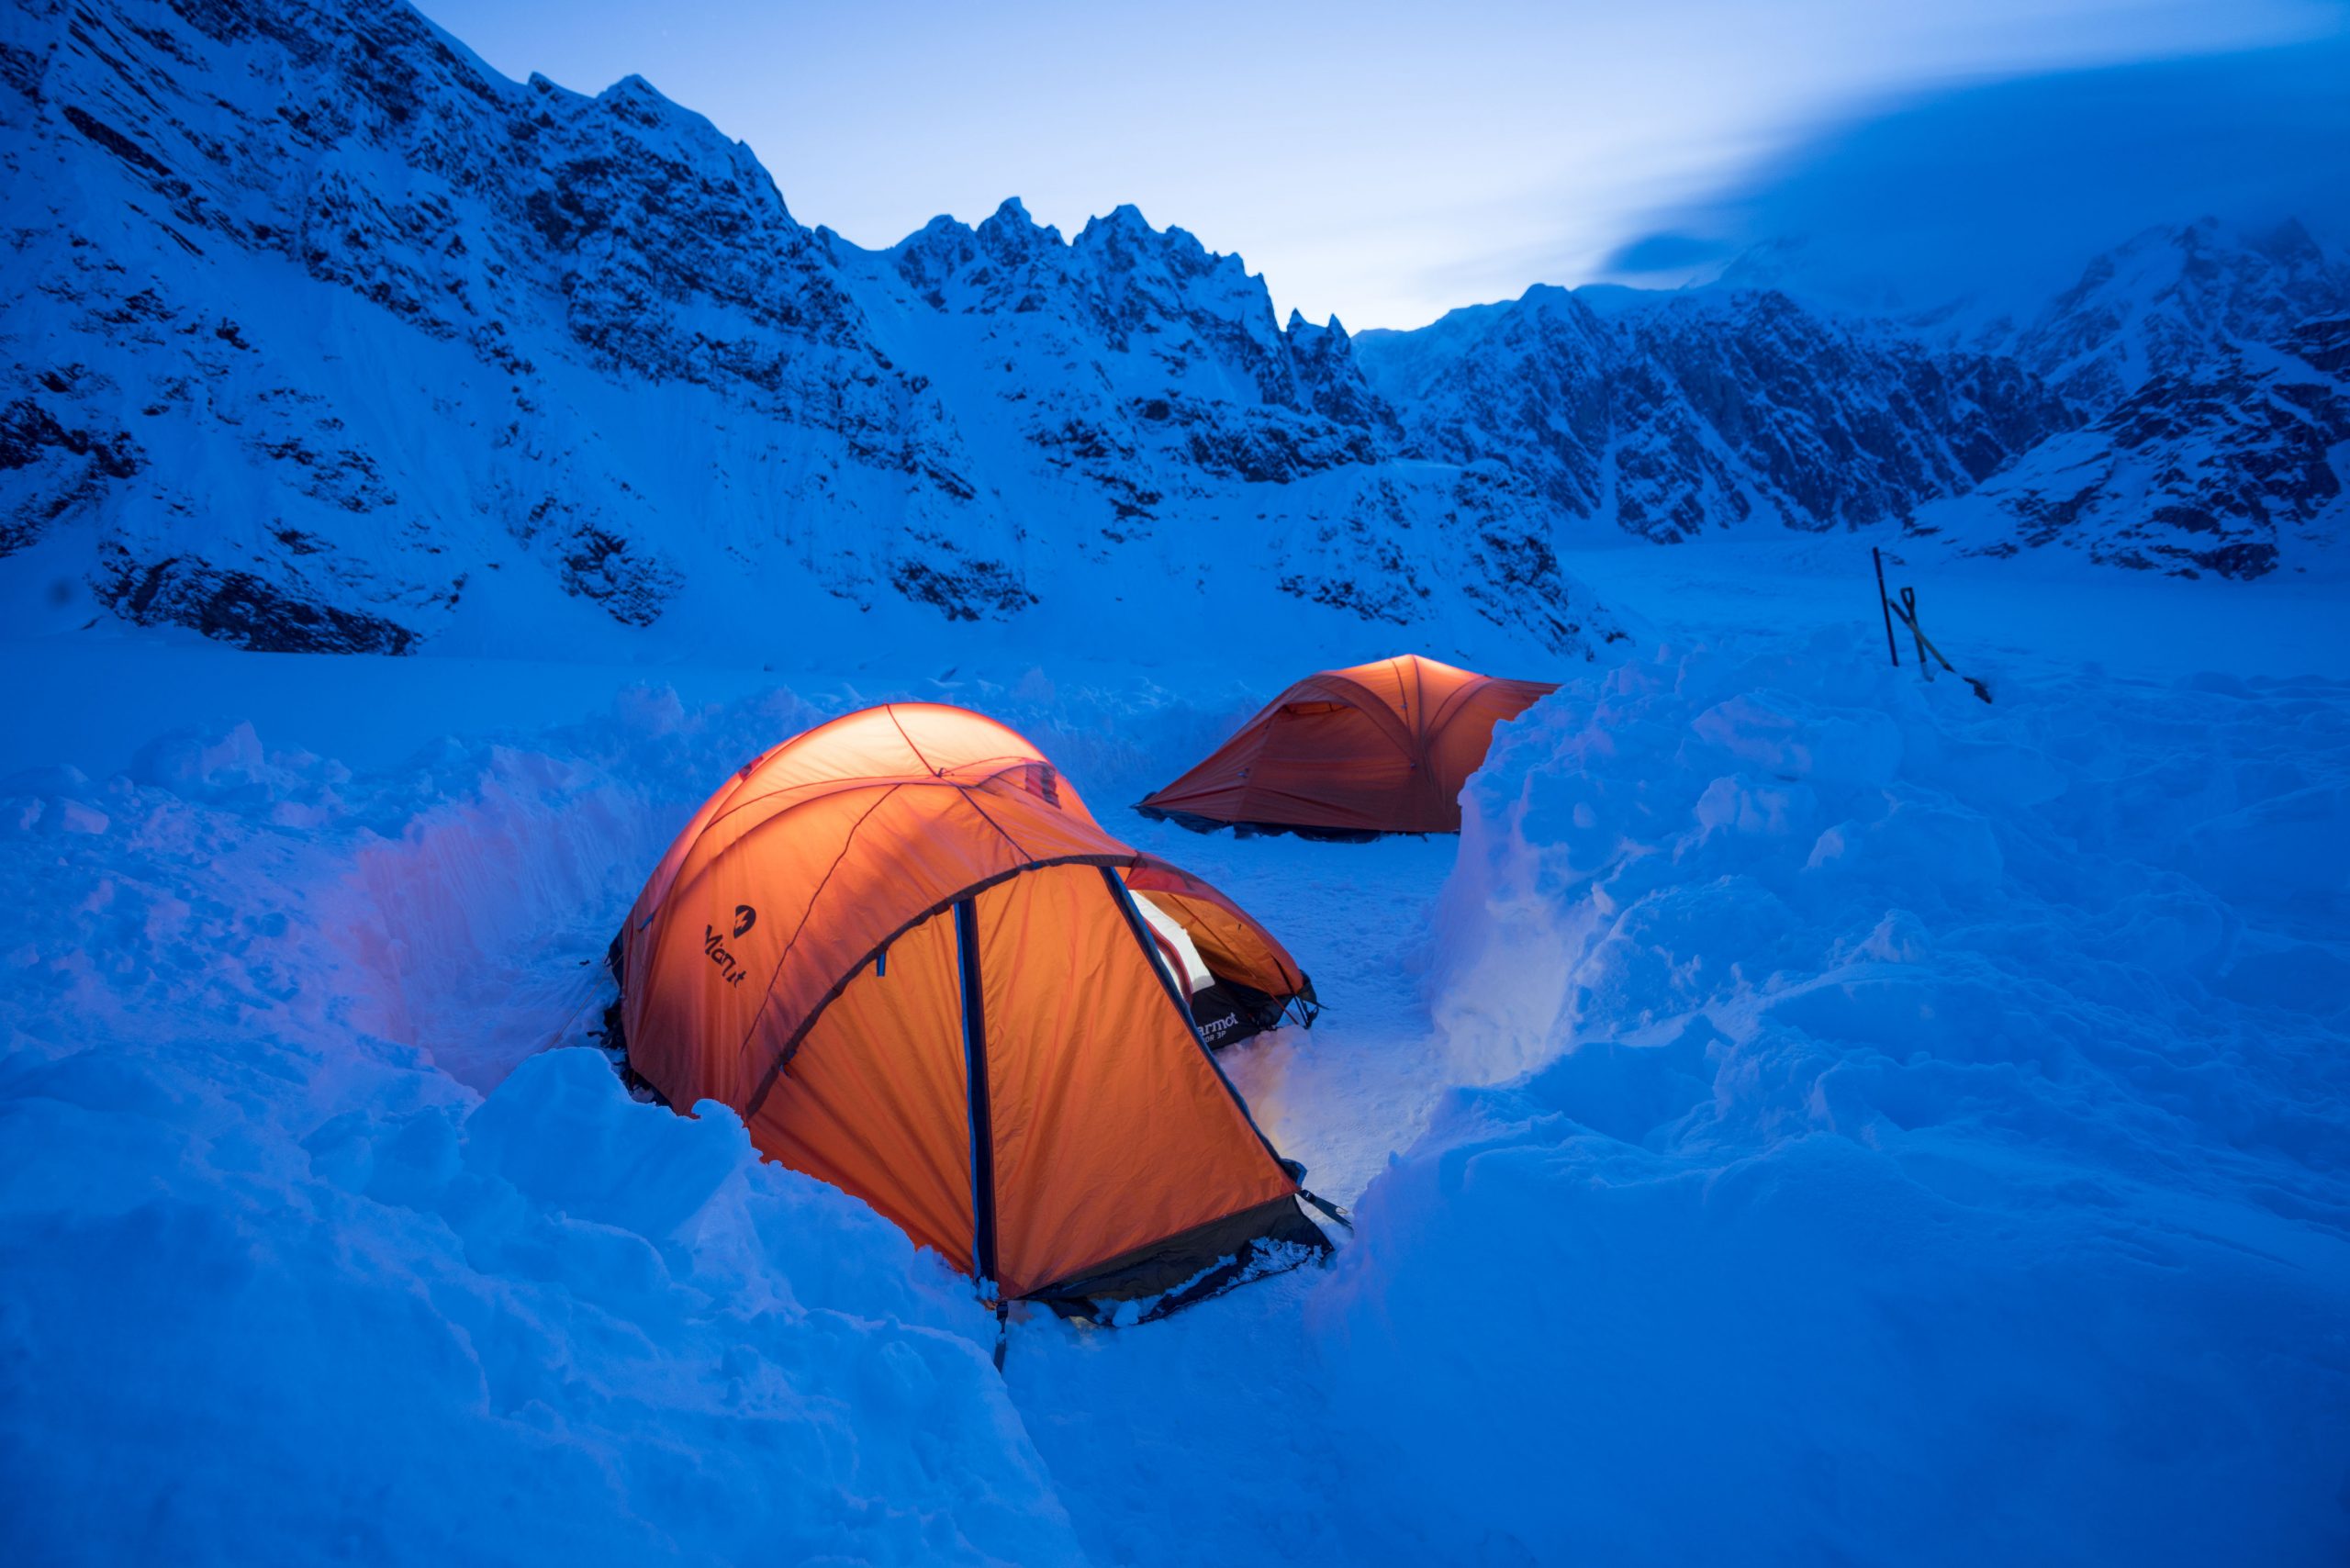 barely Universal Photoelectric Cum alegi un cort de munte potrivit pentru tine? - Nootka - Echipament